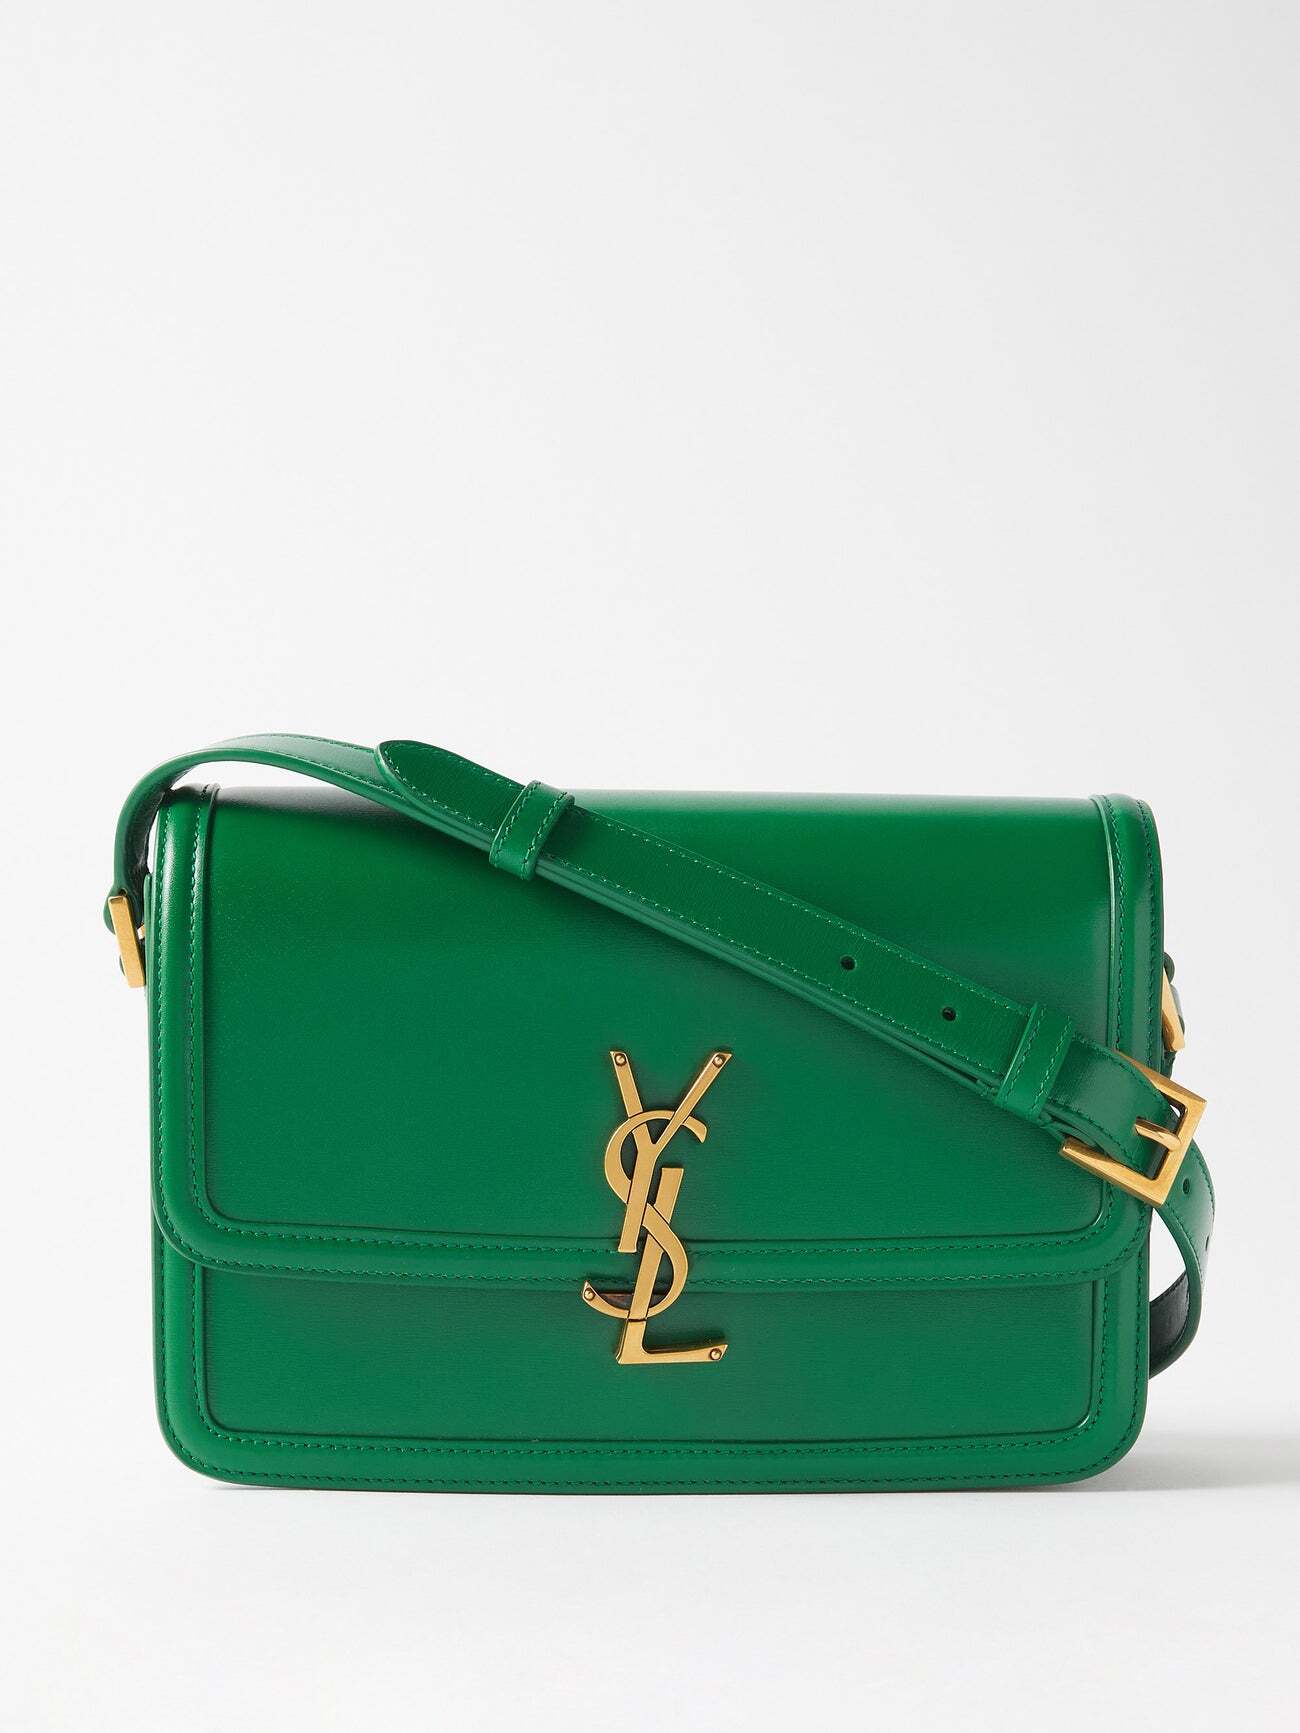 Saint Laurent - Solferino Medium Ysl-plaque Leather Shoulder Bag - Womens - Green